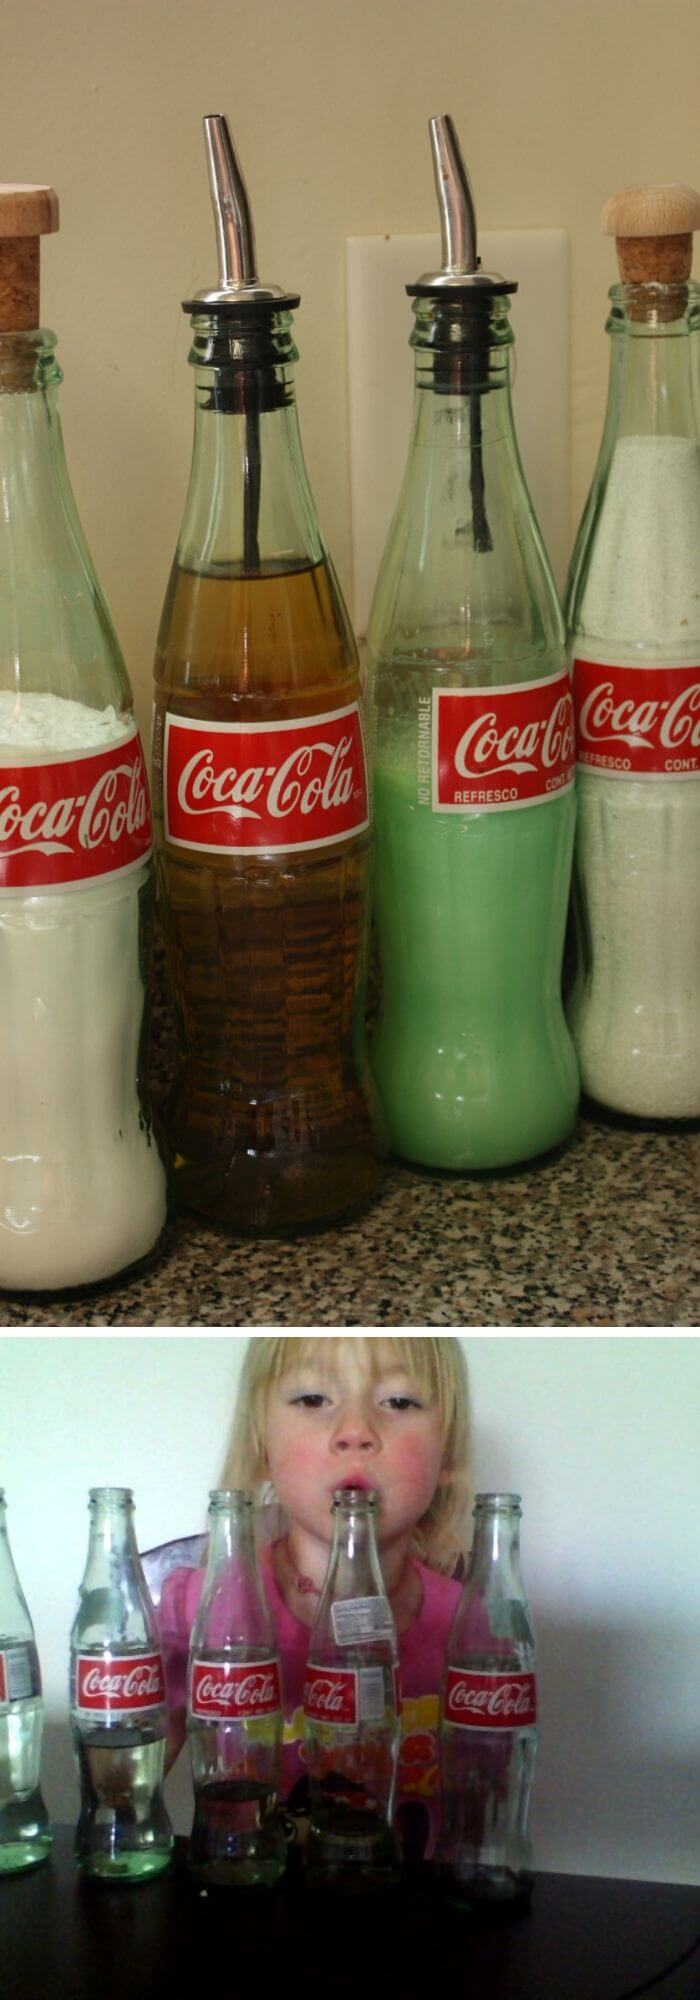 Coke bottles for storaging kitchen cleaning stuff